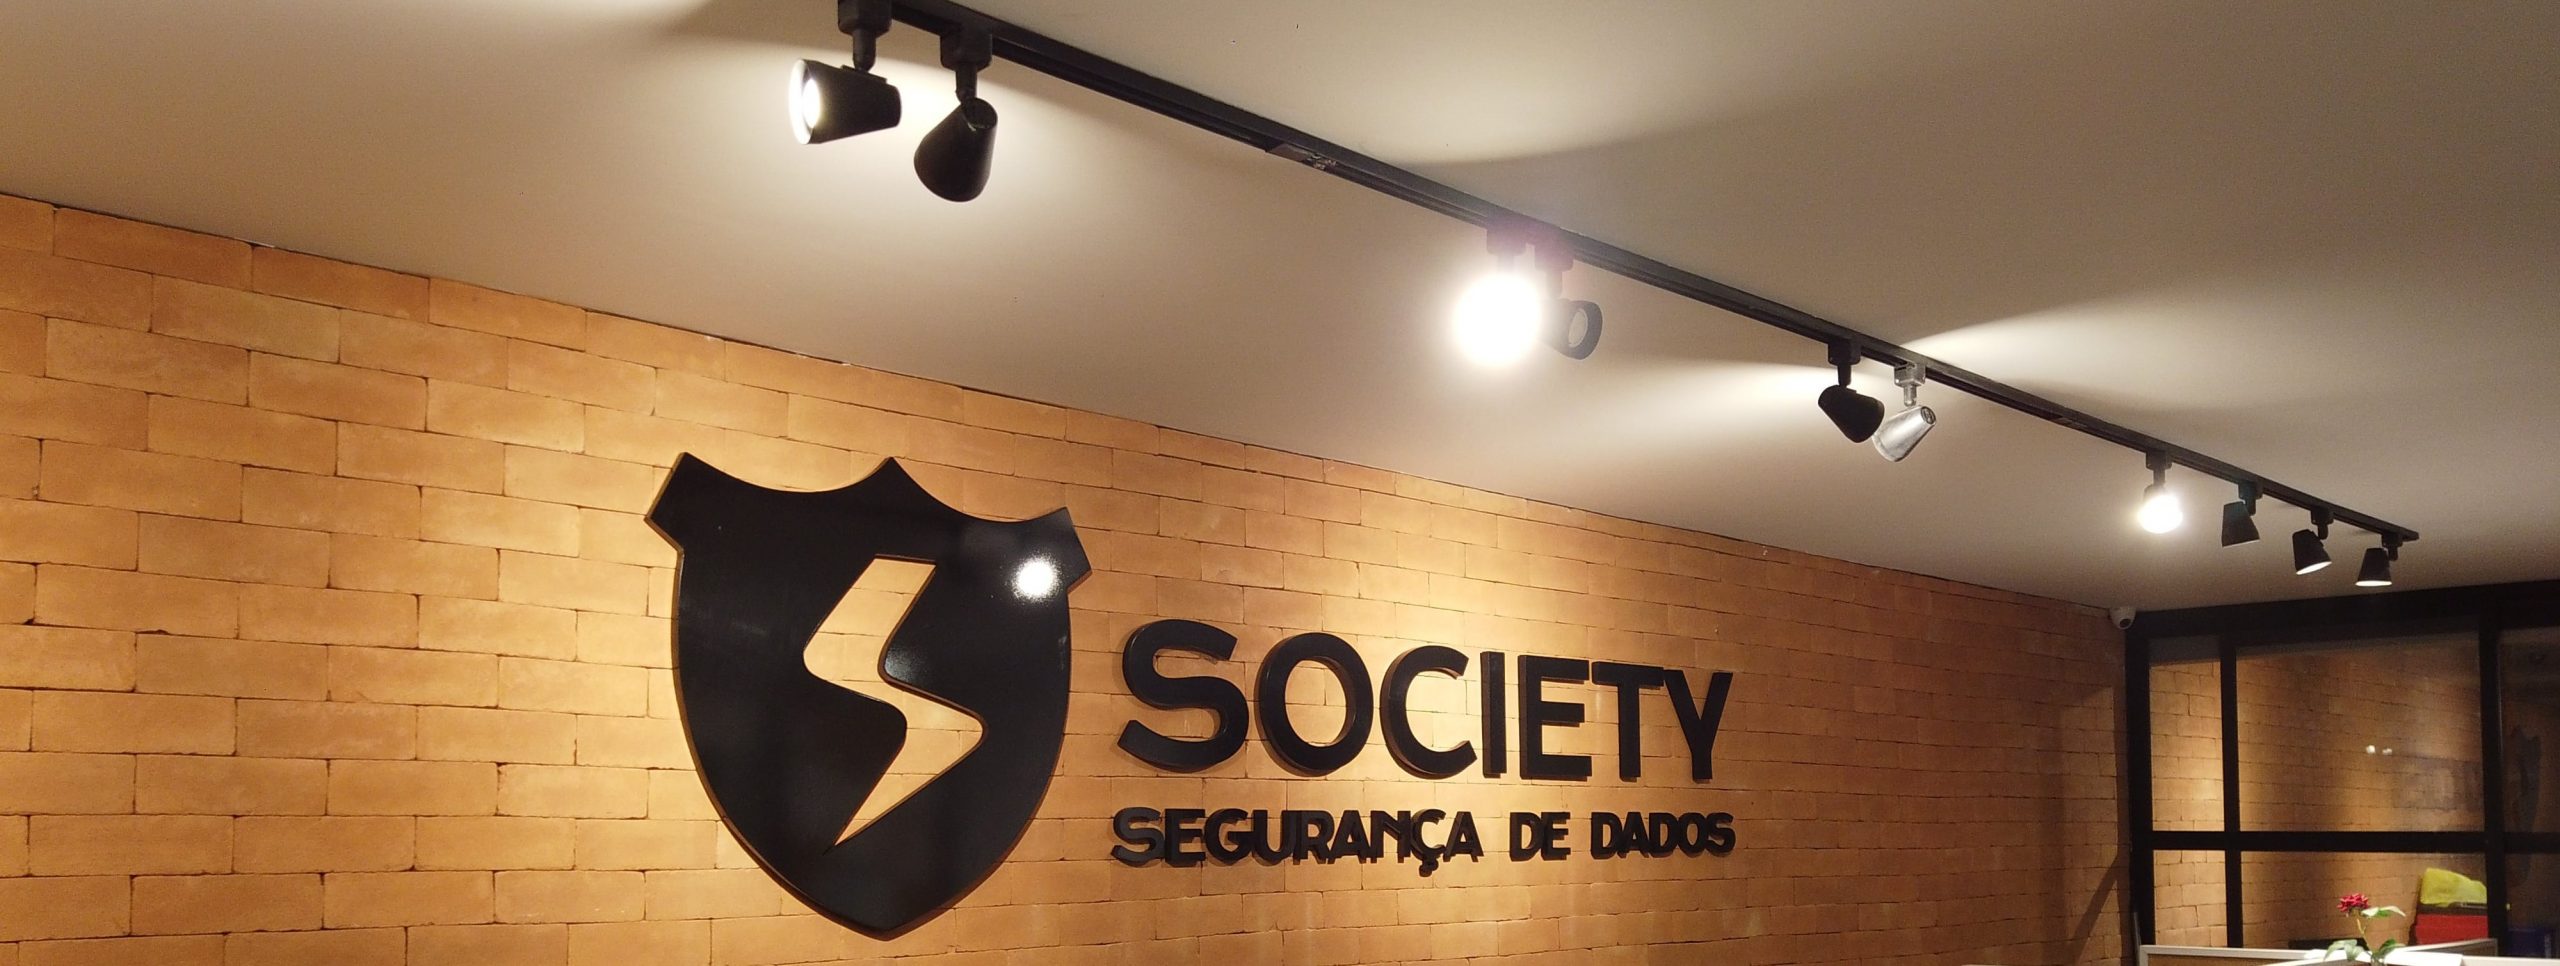 Projeto Letreiro Society